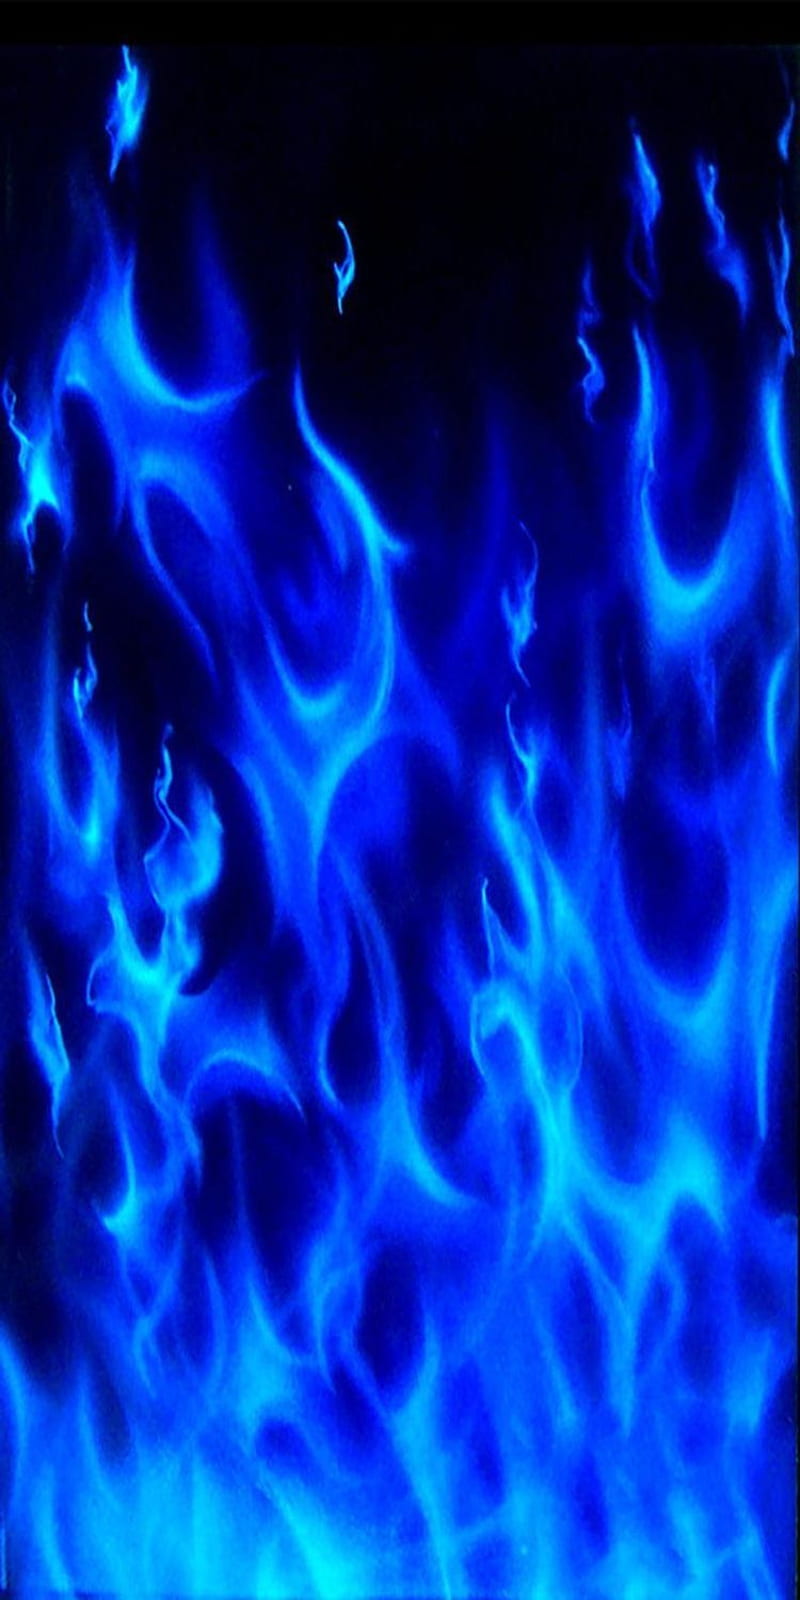 scorpio flame iphone wallpaper